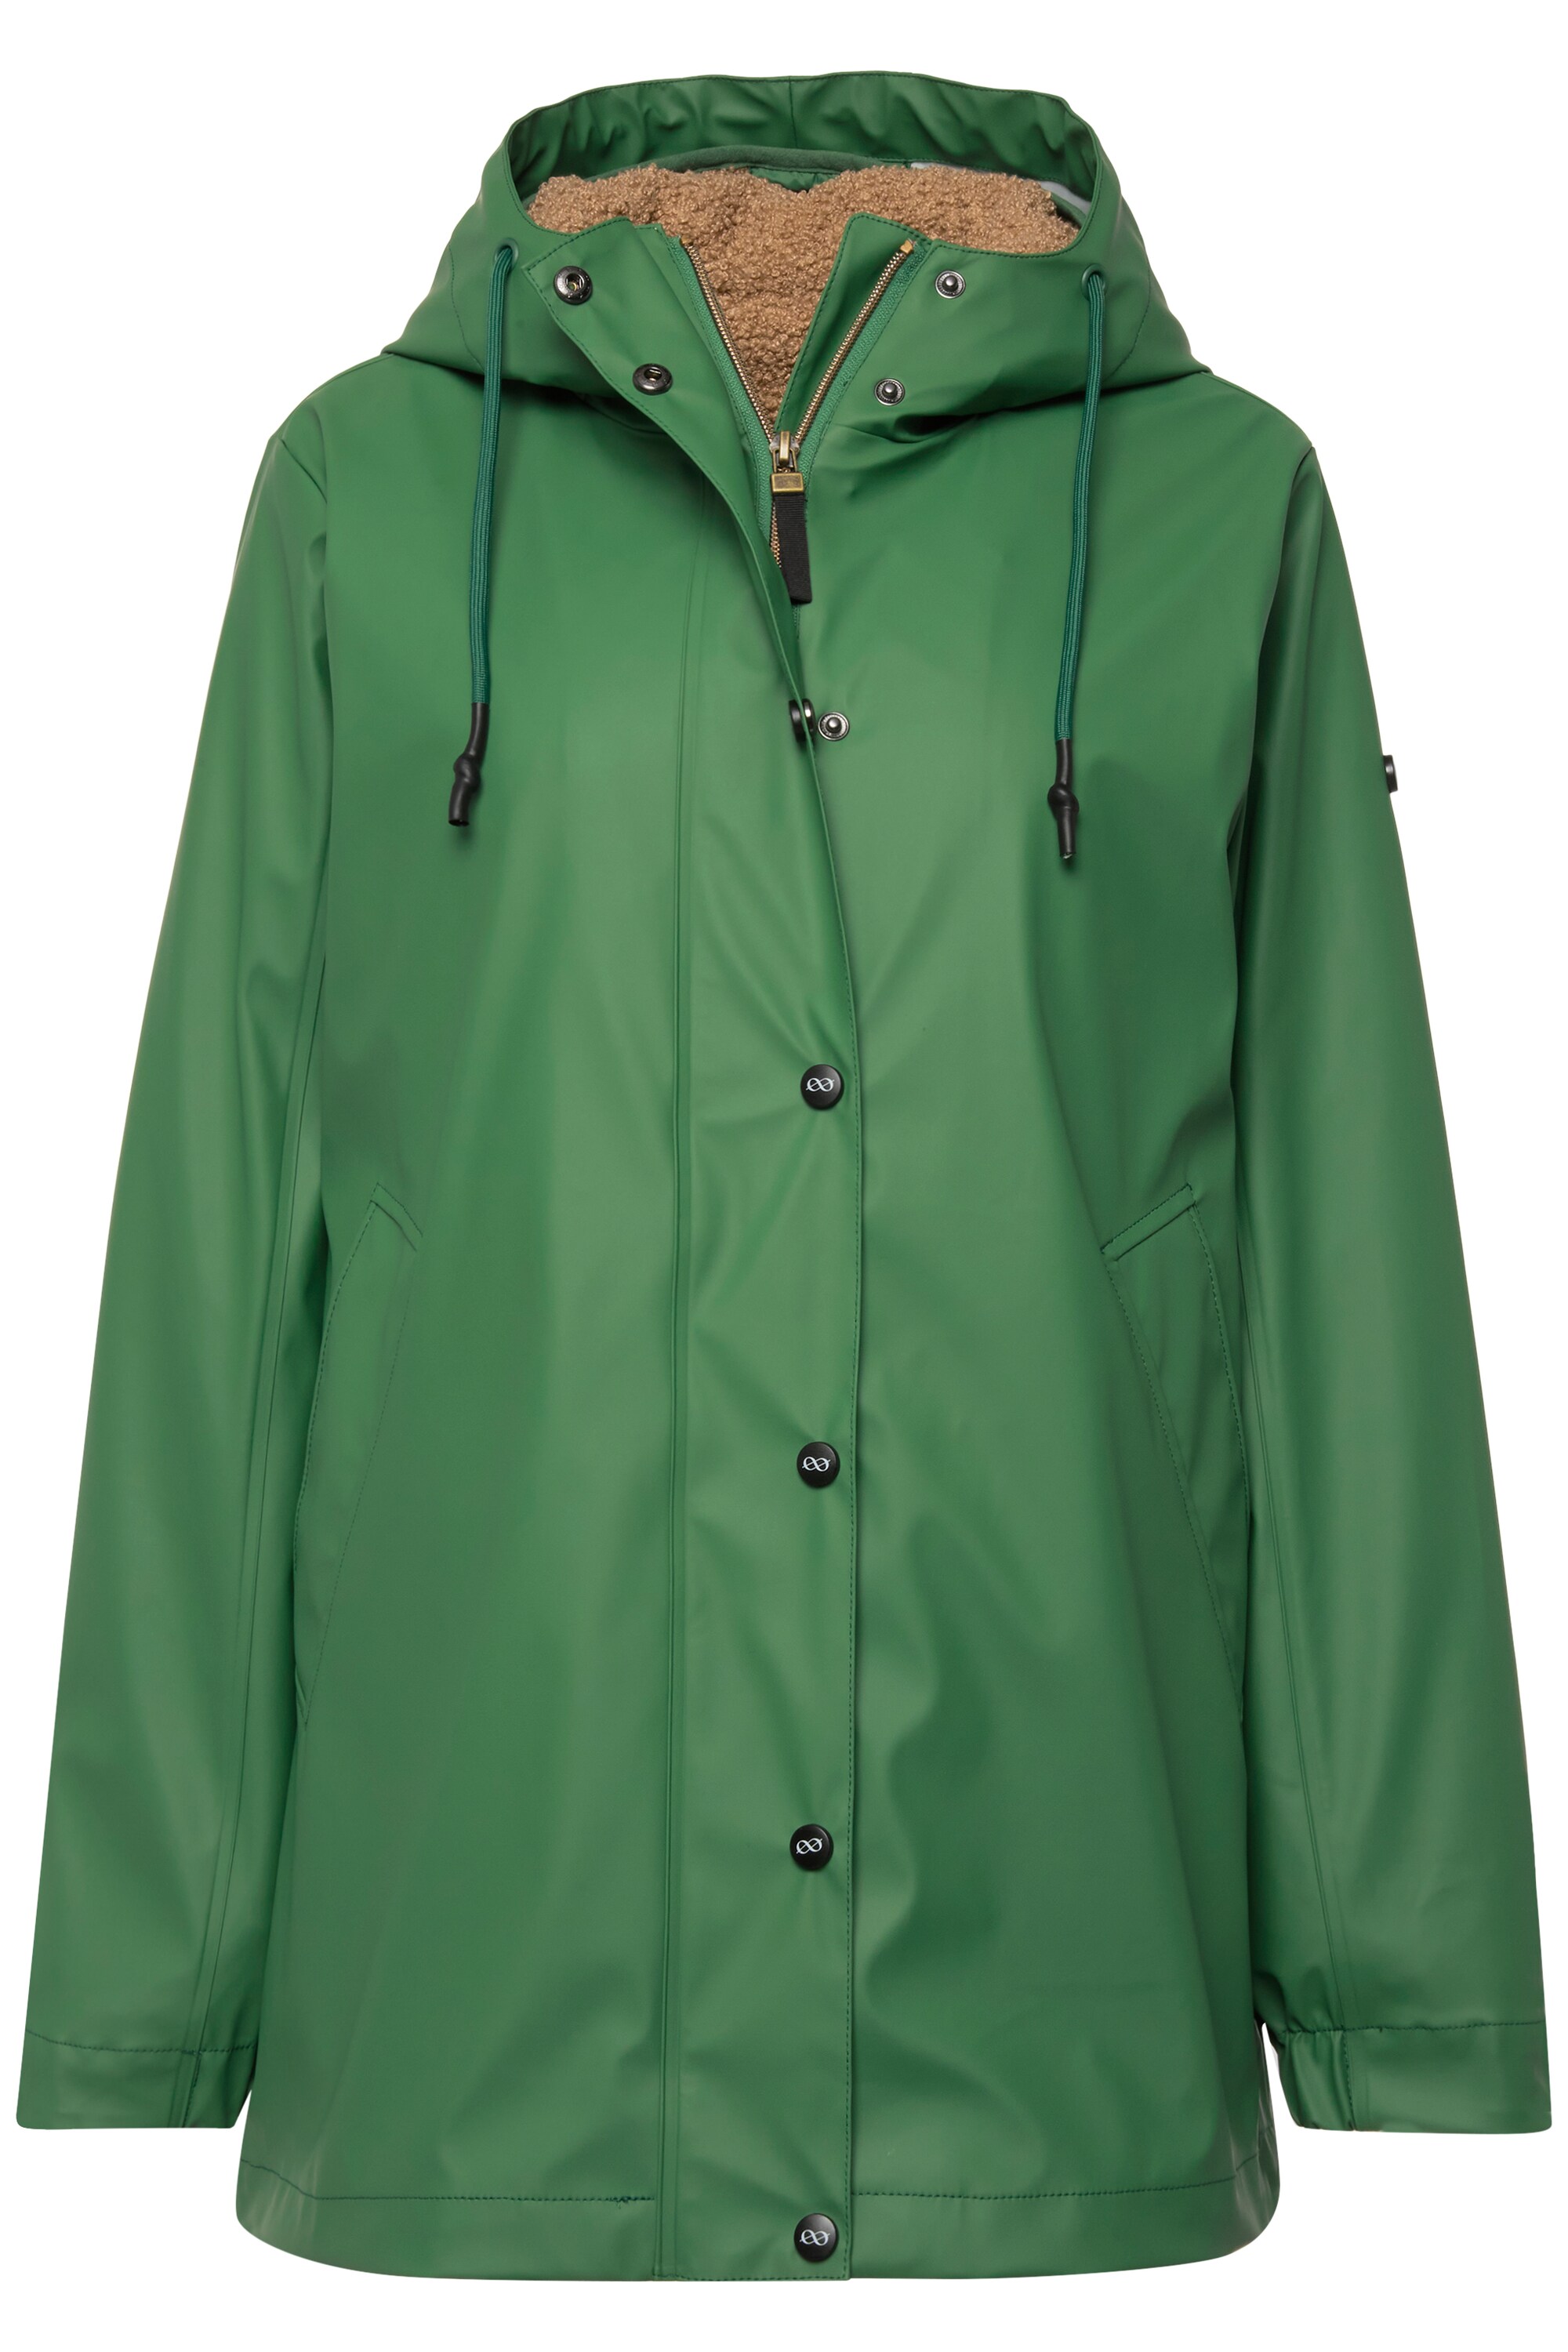 Куртка софтшелл LAURASØN, зеленый